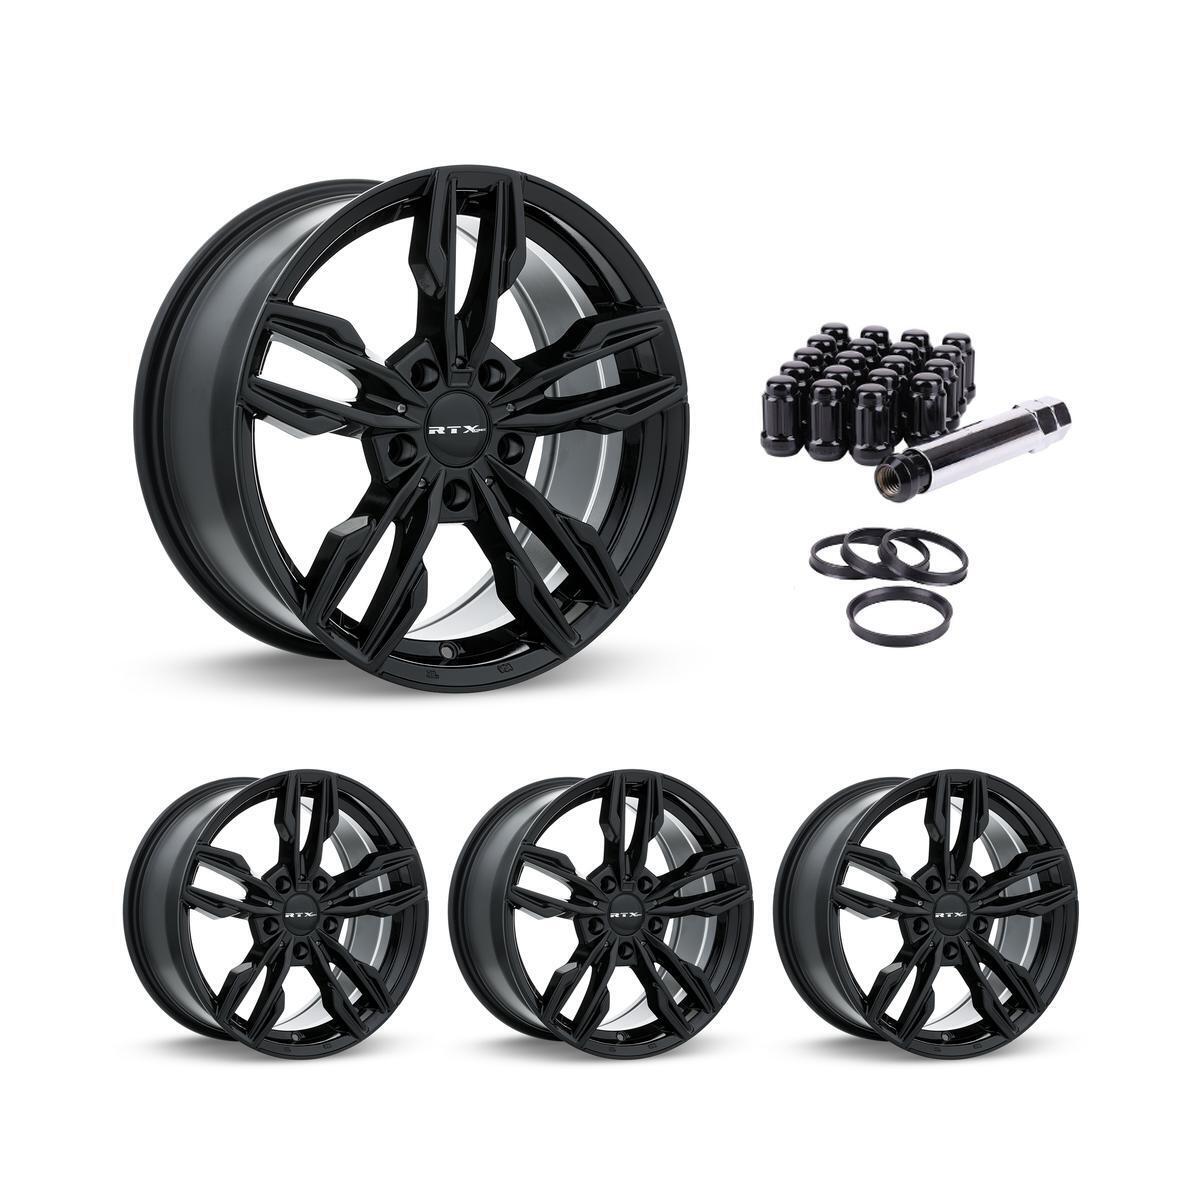 Wheel Rims Set with Black Lug Nuts Kit for 04-06 BMW 325Ci P861704 17 inch